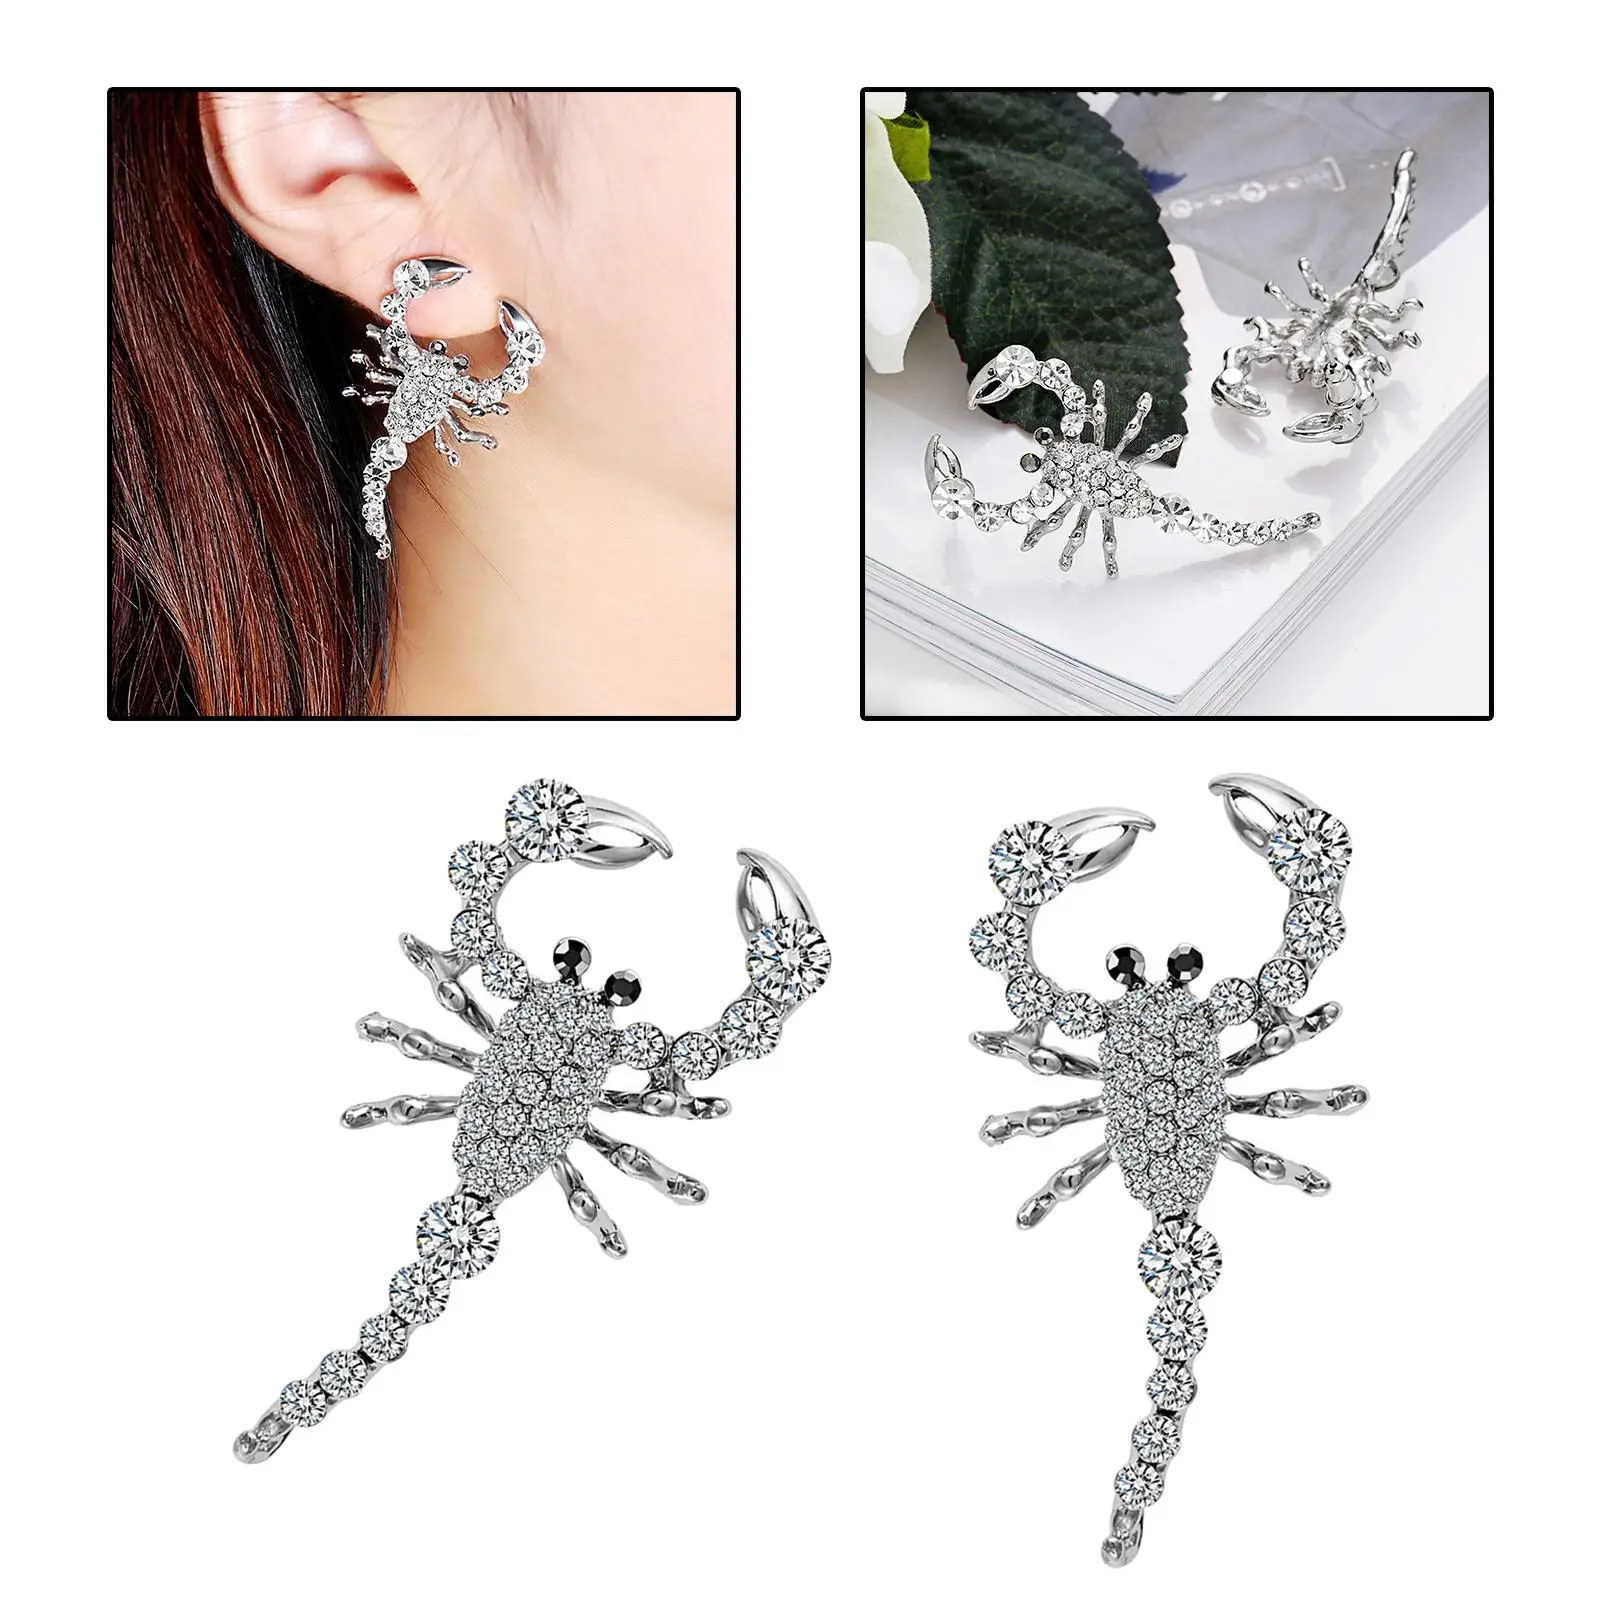 Rock Style Scorpion Ear Stud Exaggerated Fashion Jewelry Animal Earrings for Girlfriends Men Women Unisex Parties Beach